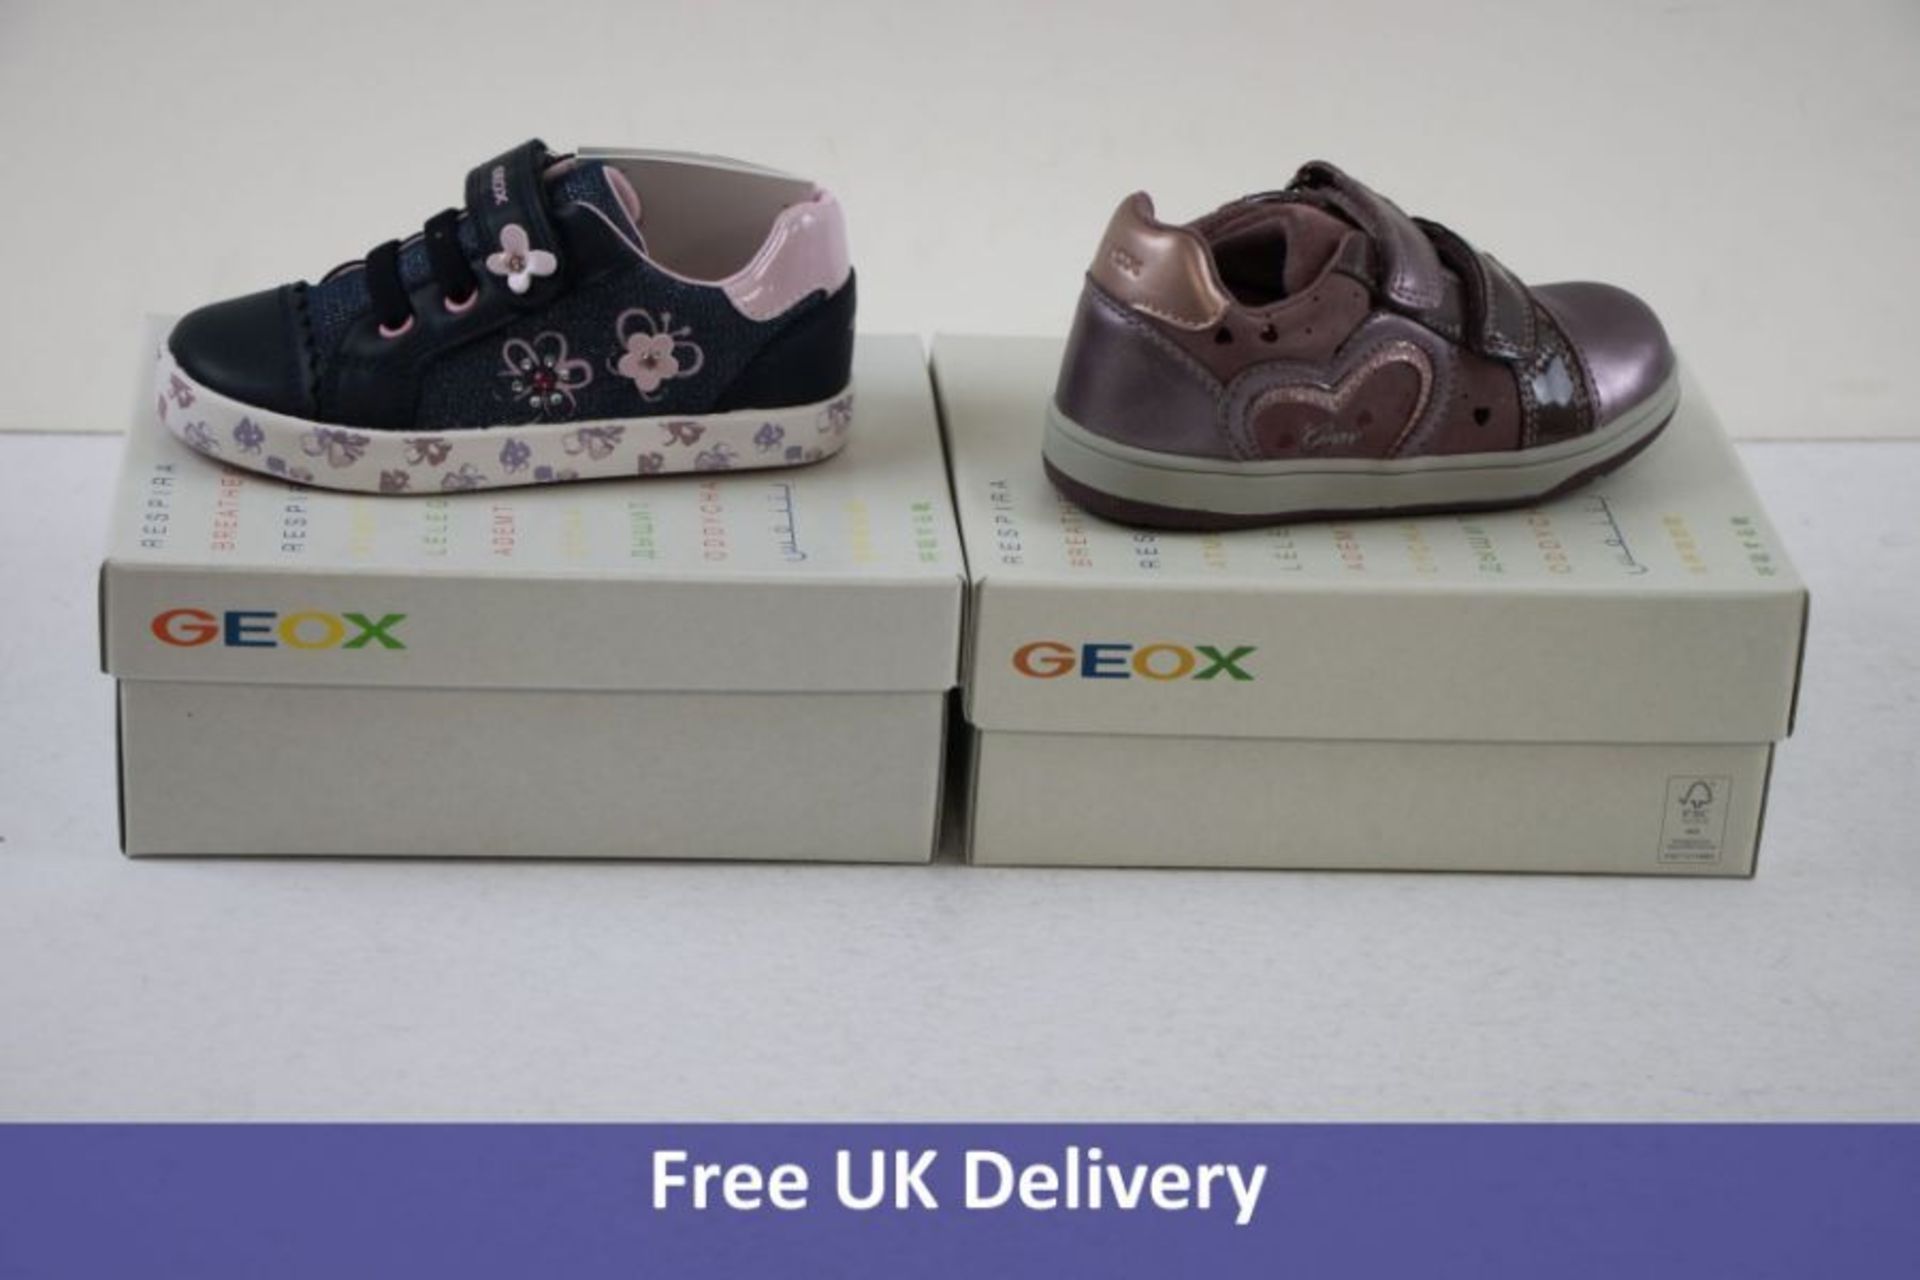 Two Pairs of Geox Kids Footwear to Include 1x B Kilwi G, Avio, Pink, UK 7.5 and 1x B N.Flick G, Dark